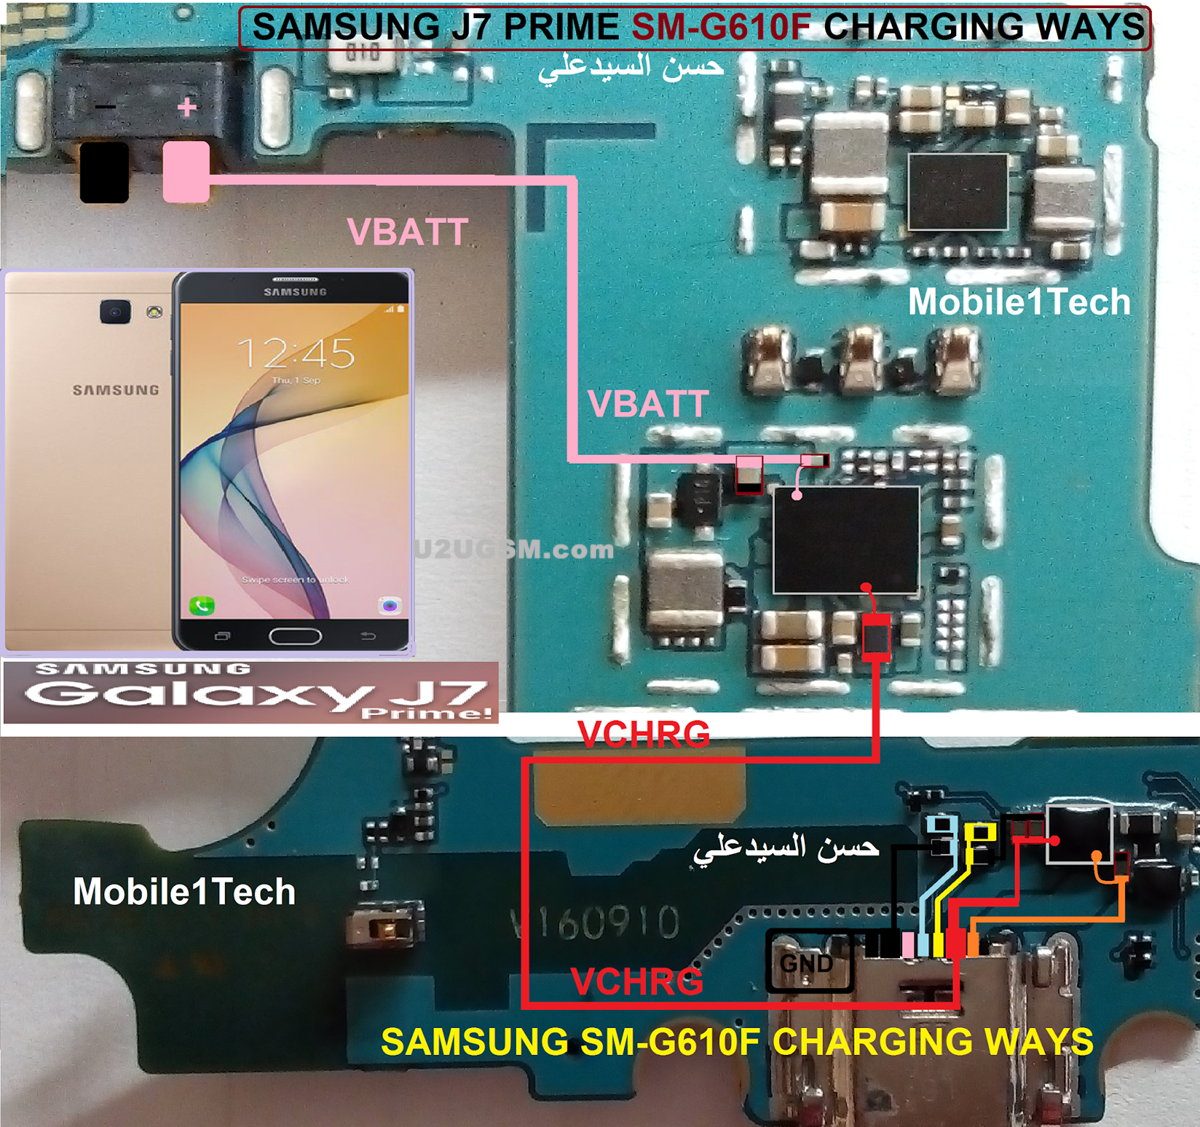 Jual Charger Samsung J7 Prime 1 55a Original Bawaa Hp 100